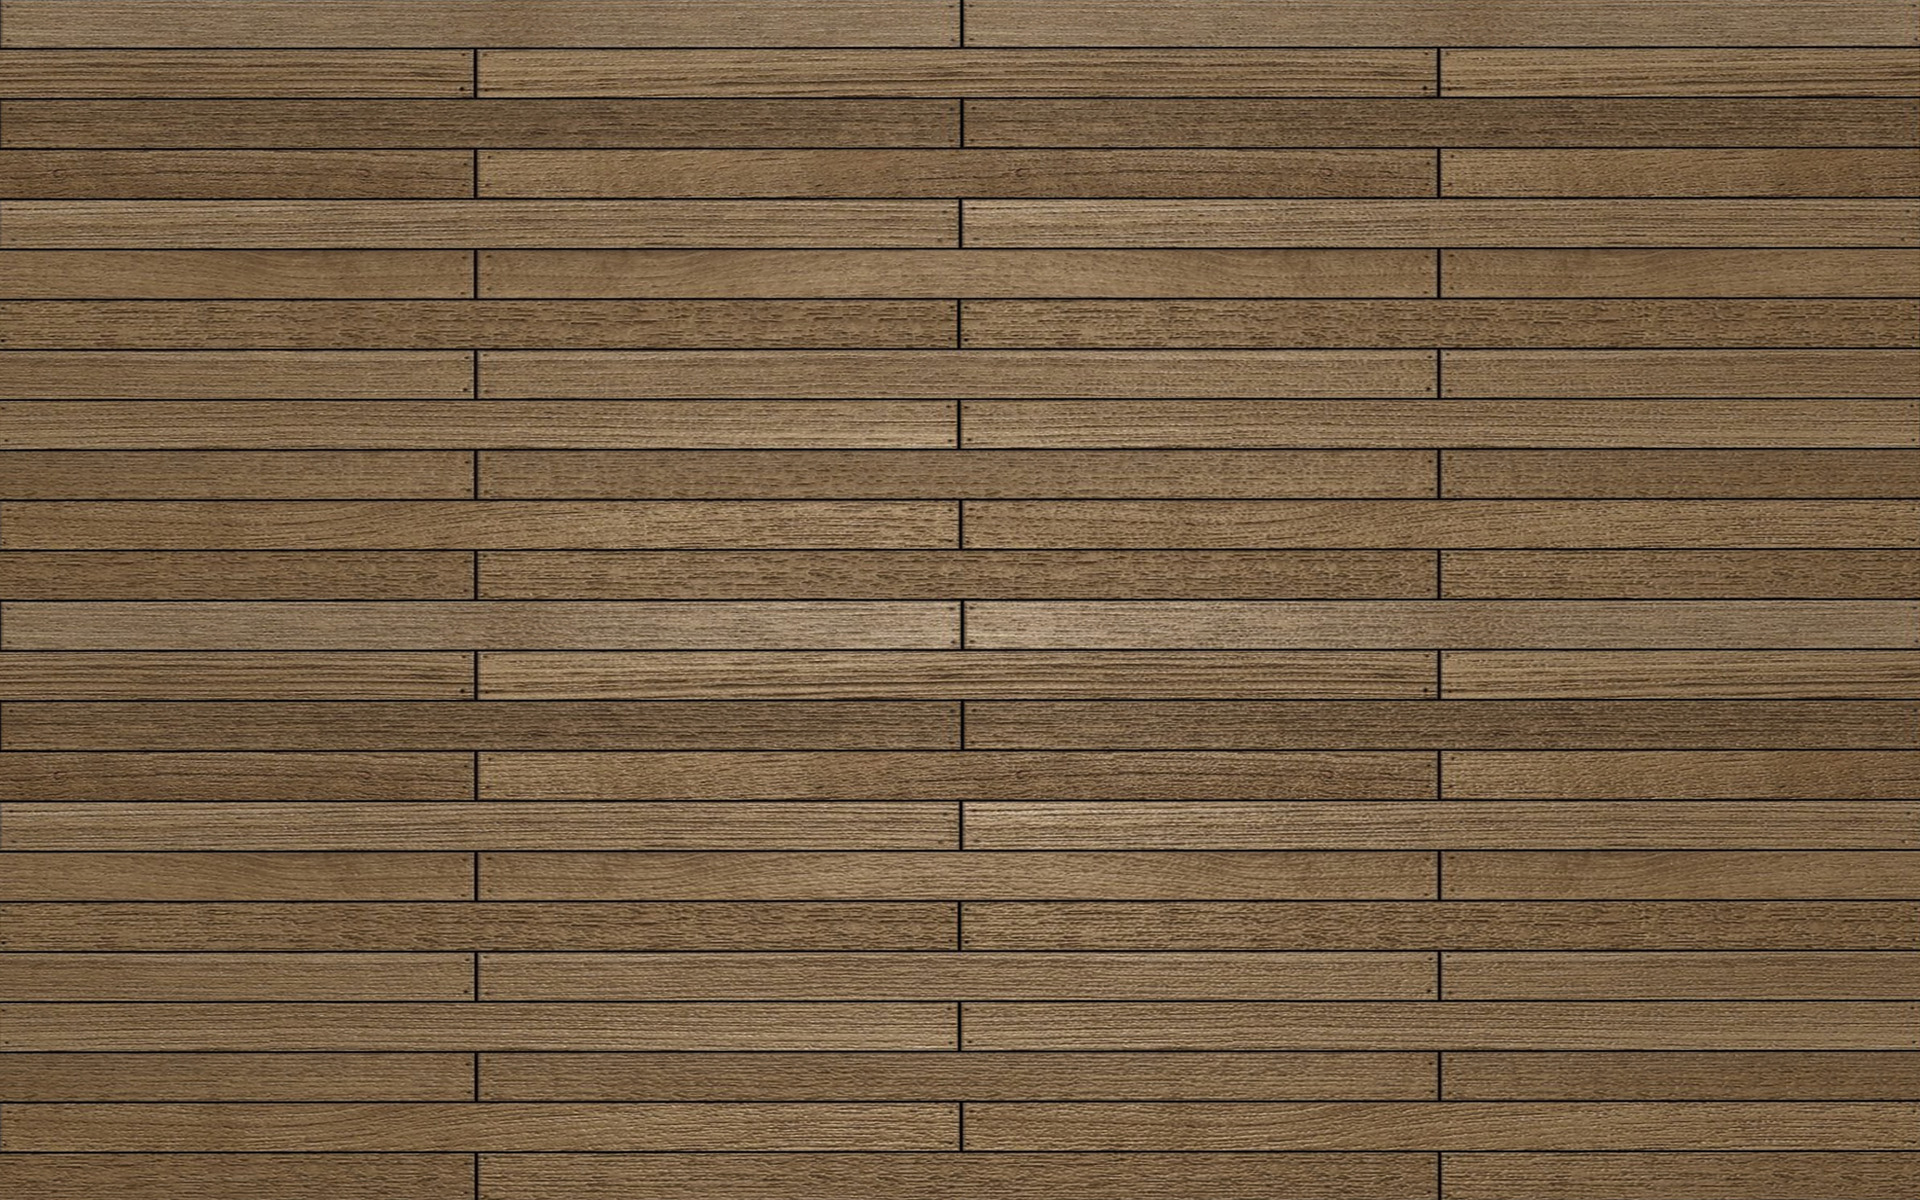 Pics Of Dark Wood Floors Floor Texture